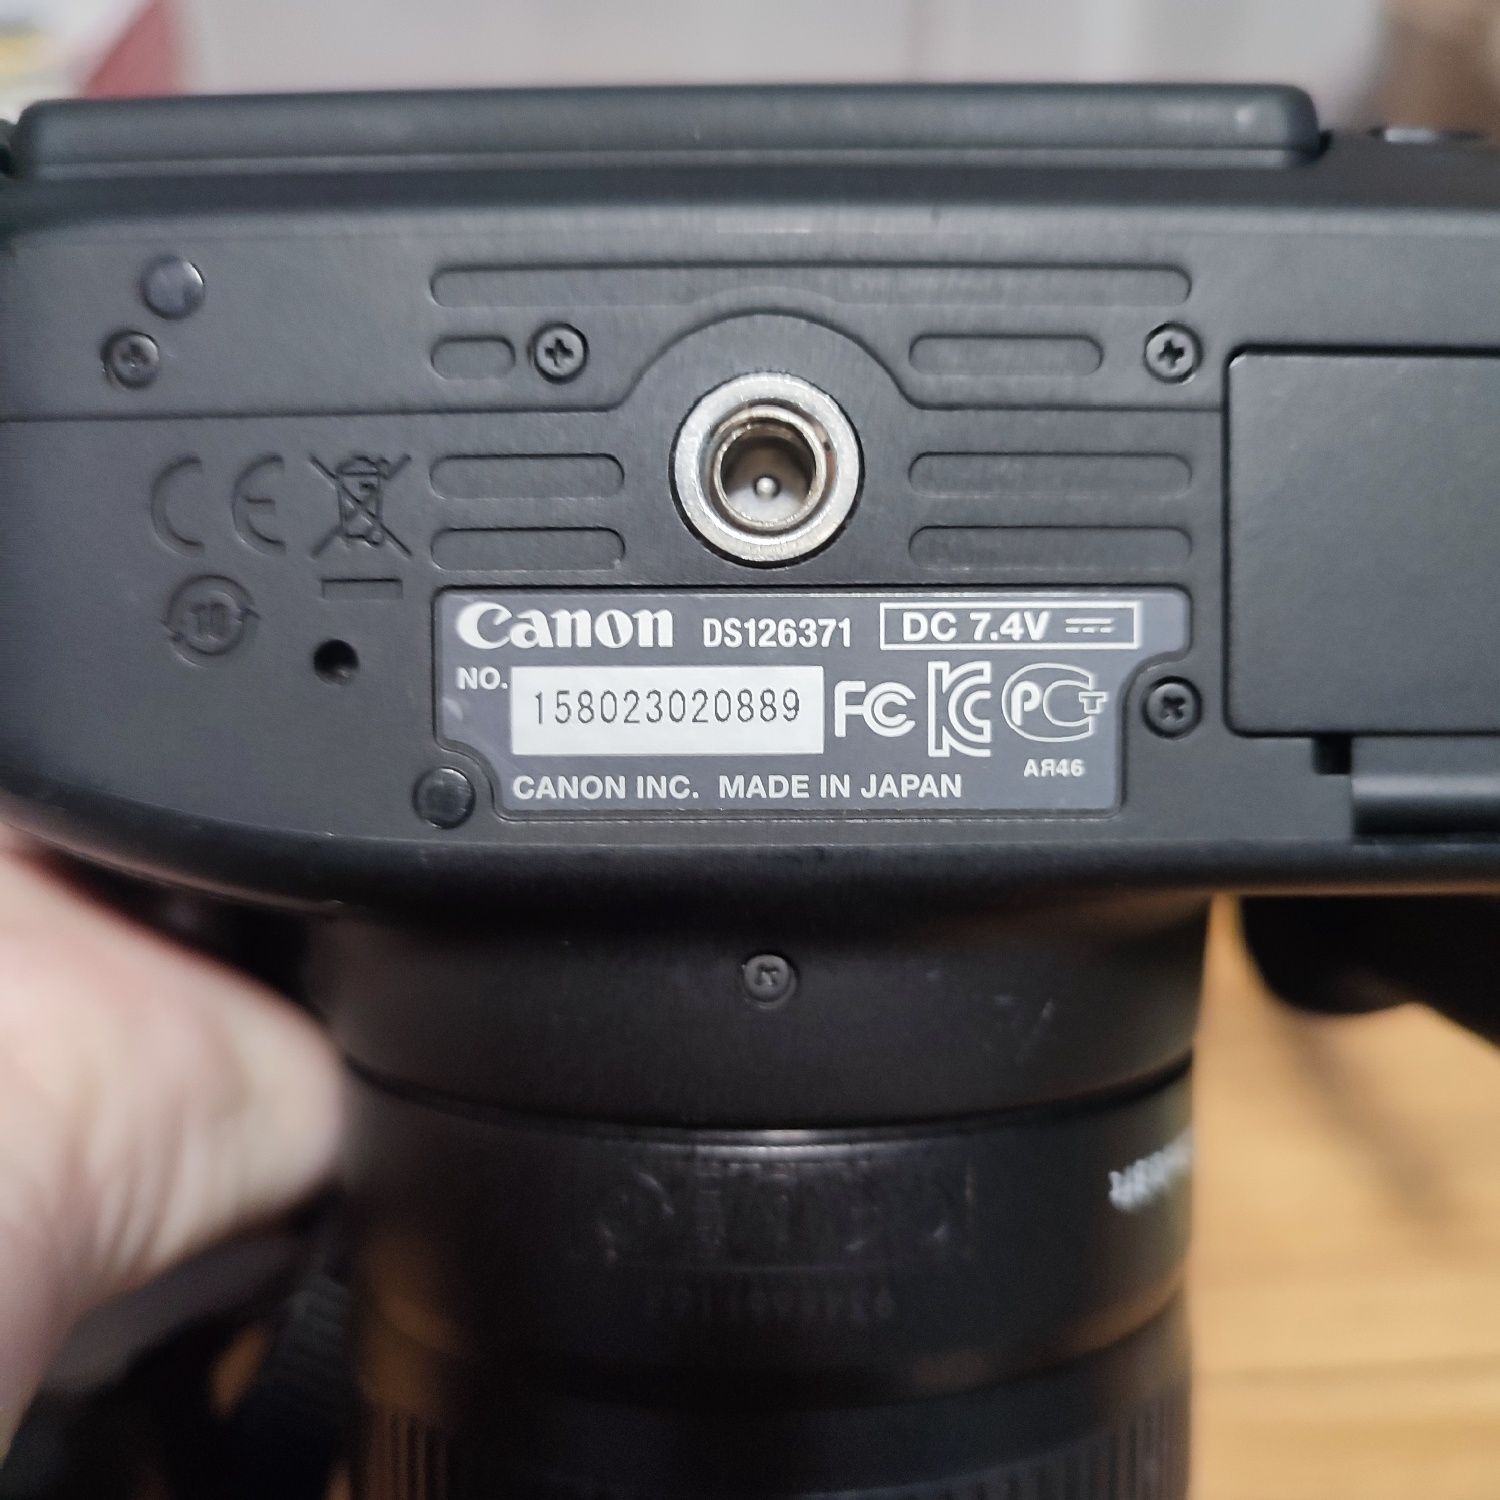 Фотоапарат Canon 650D,кенон 650д